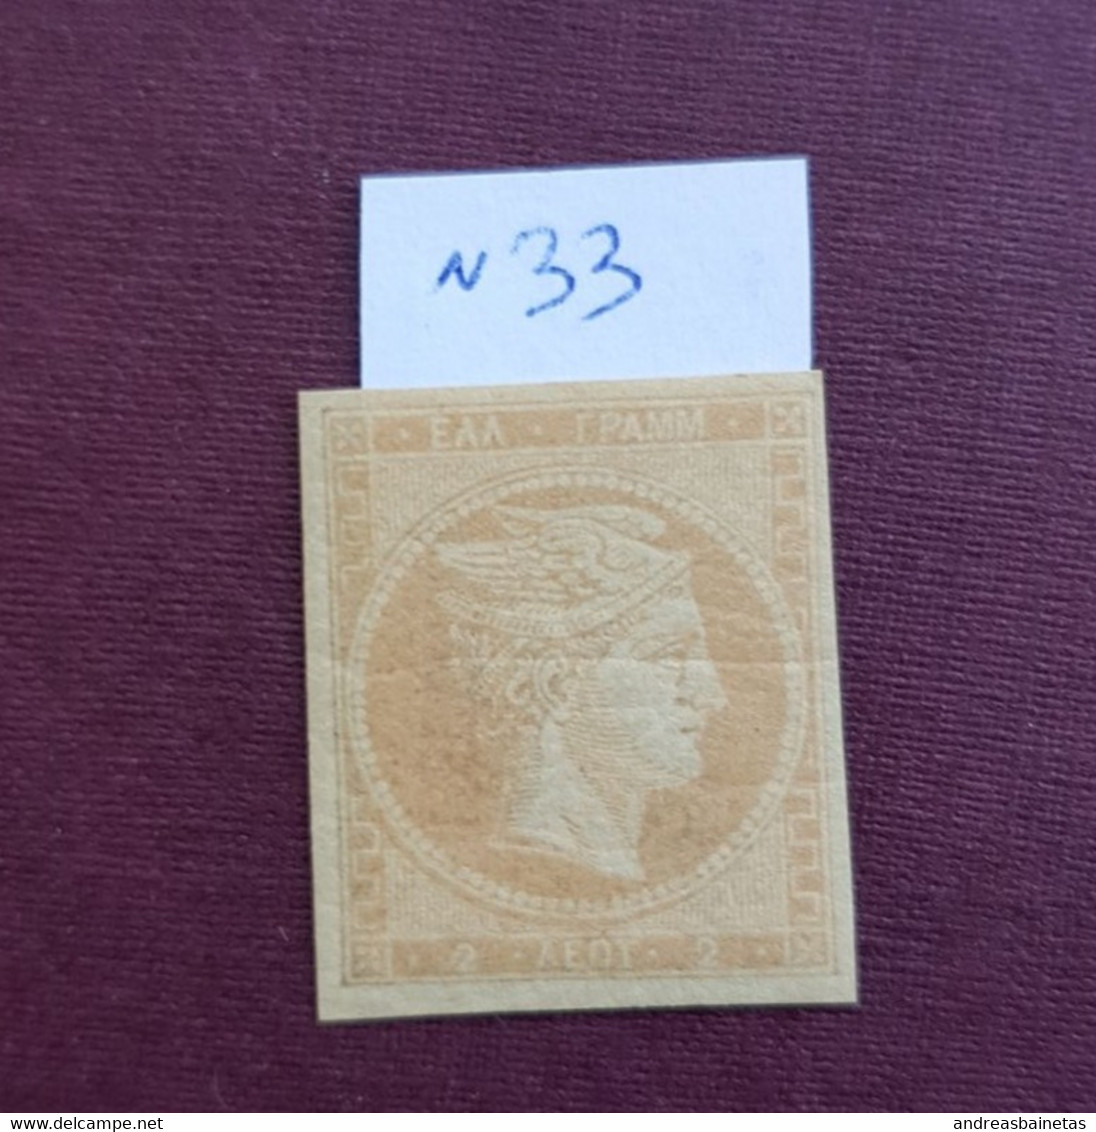 Stamps GREECE Large  Hermes Heads  1871-1872 No 33 MNH  2 Λ. - Greek Lepton - Ungebraucht